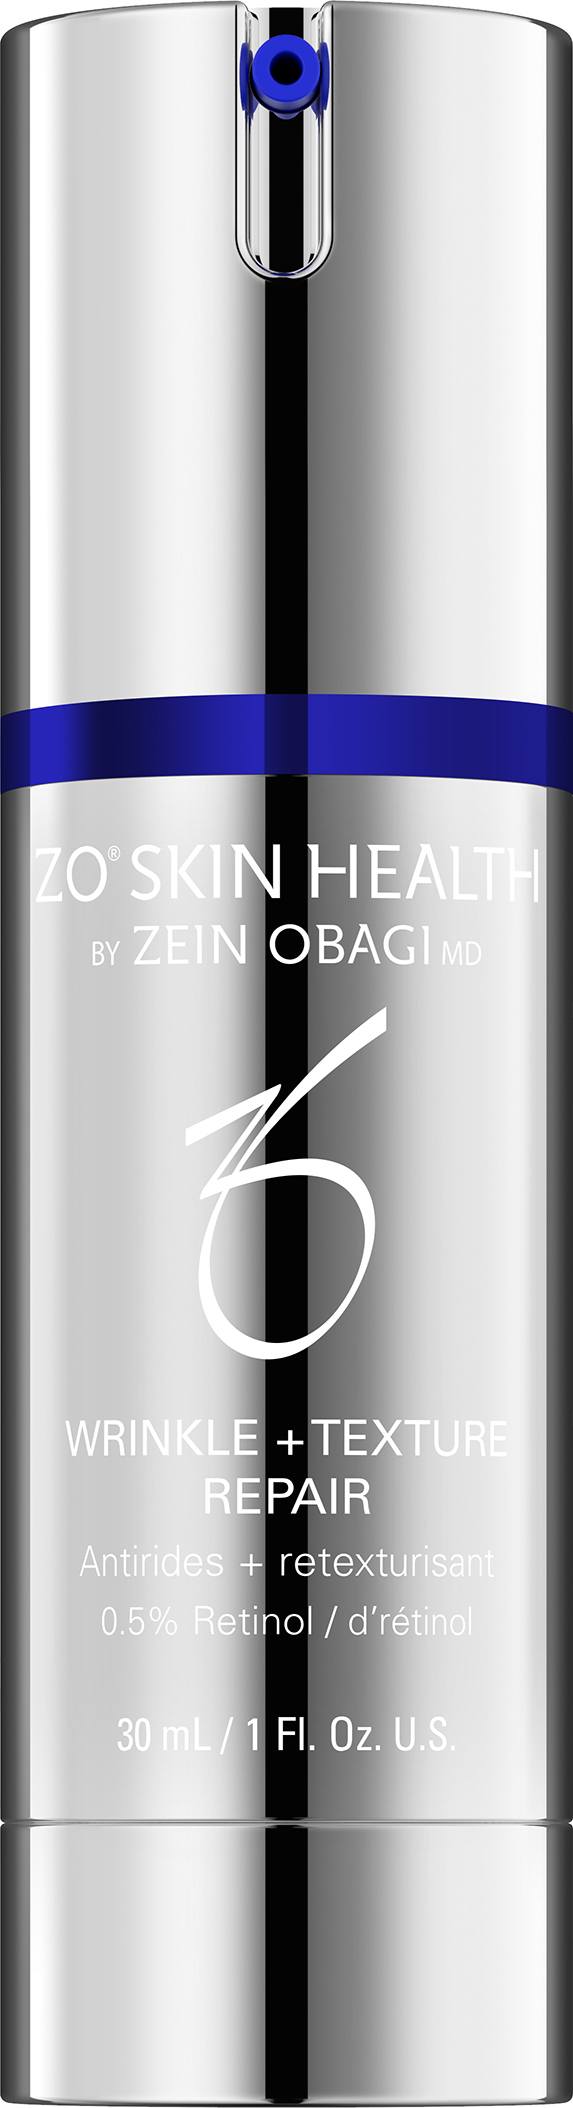 ZO Skin Brightening Program + Texture Repair Wrinkle + Texture Repair Travel Size Captivating